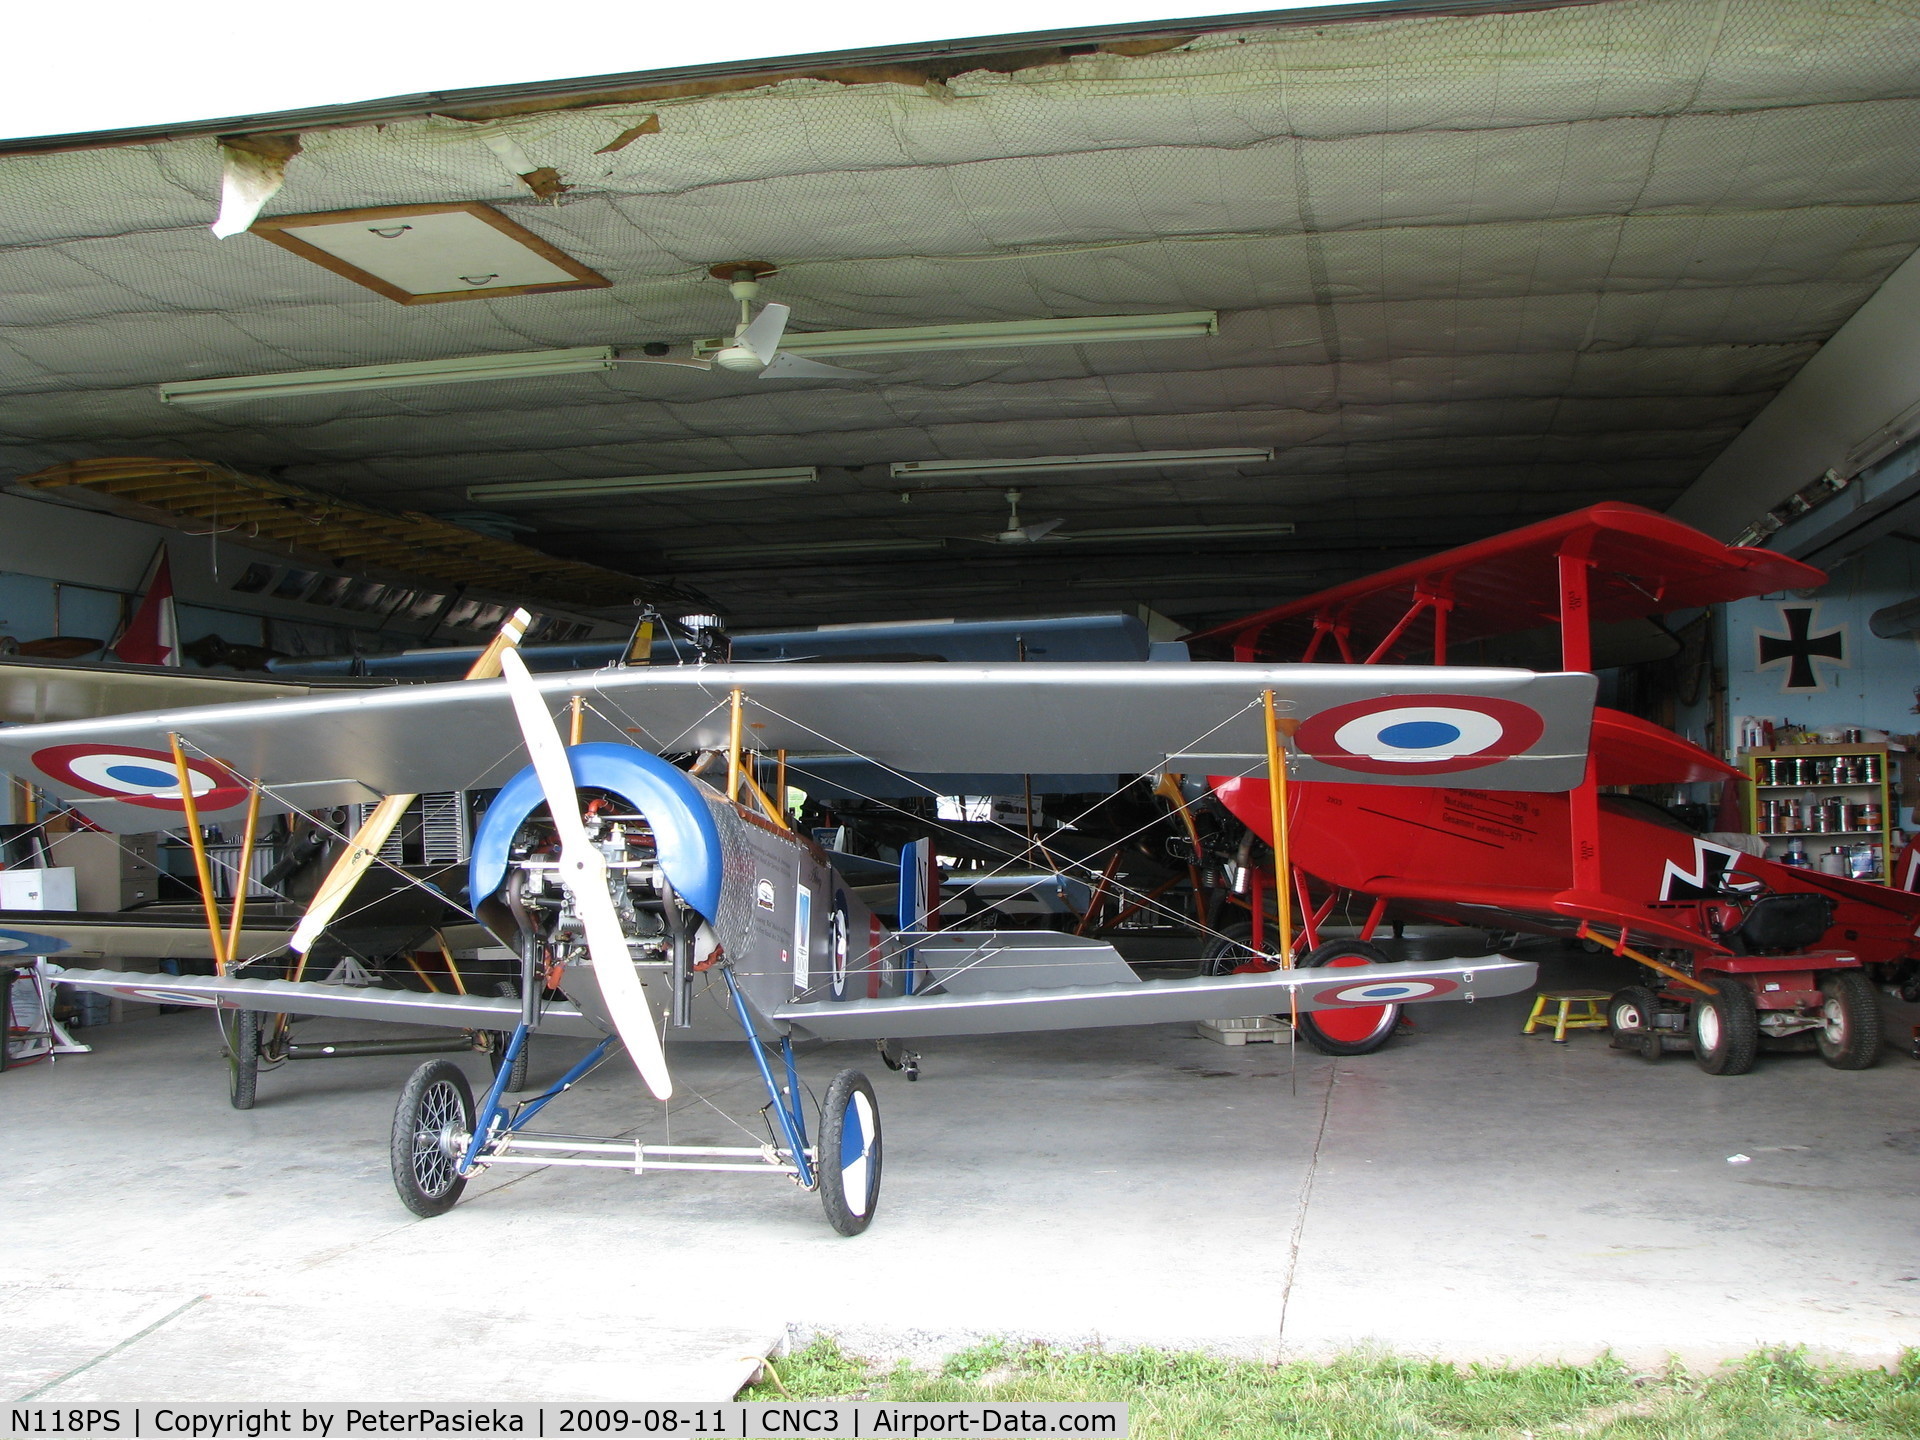 N118PS, 2003 Nieuport 11 Replica C/N 009, 7/8 scale Nieuport 11 visiting The Great War Flying Museum